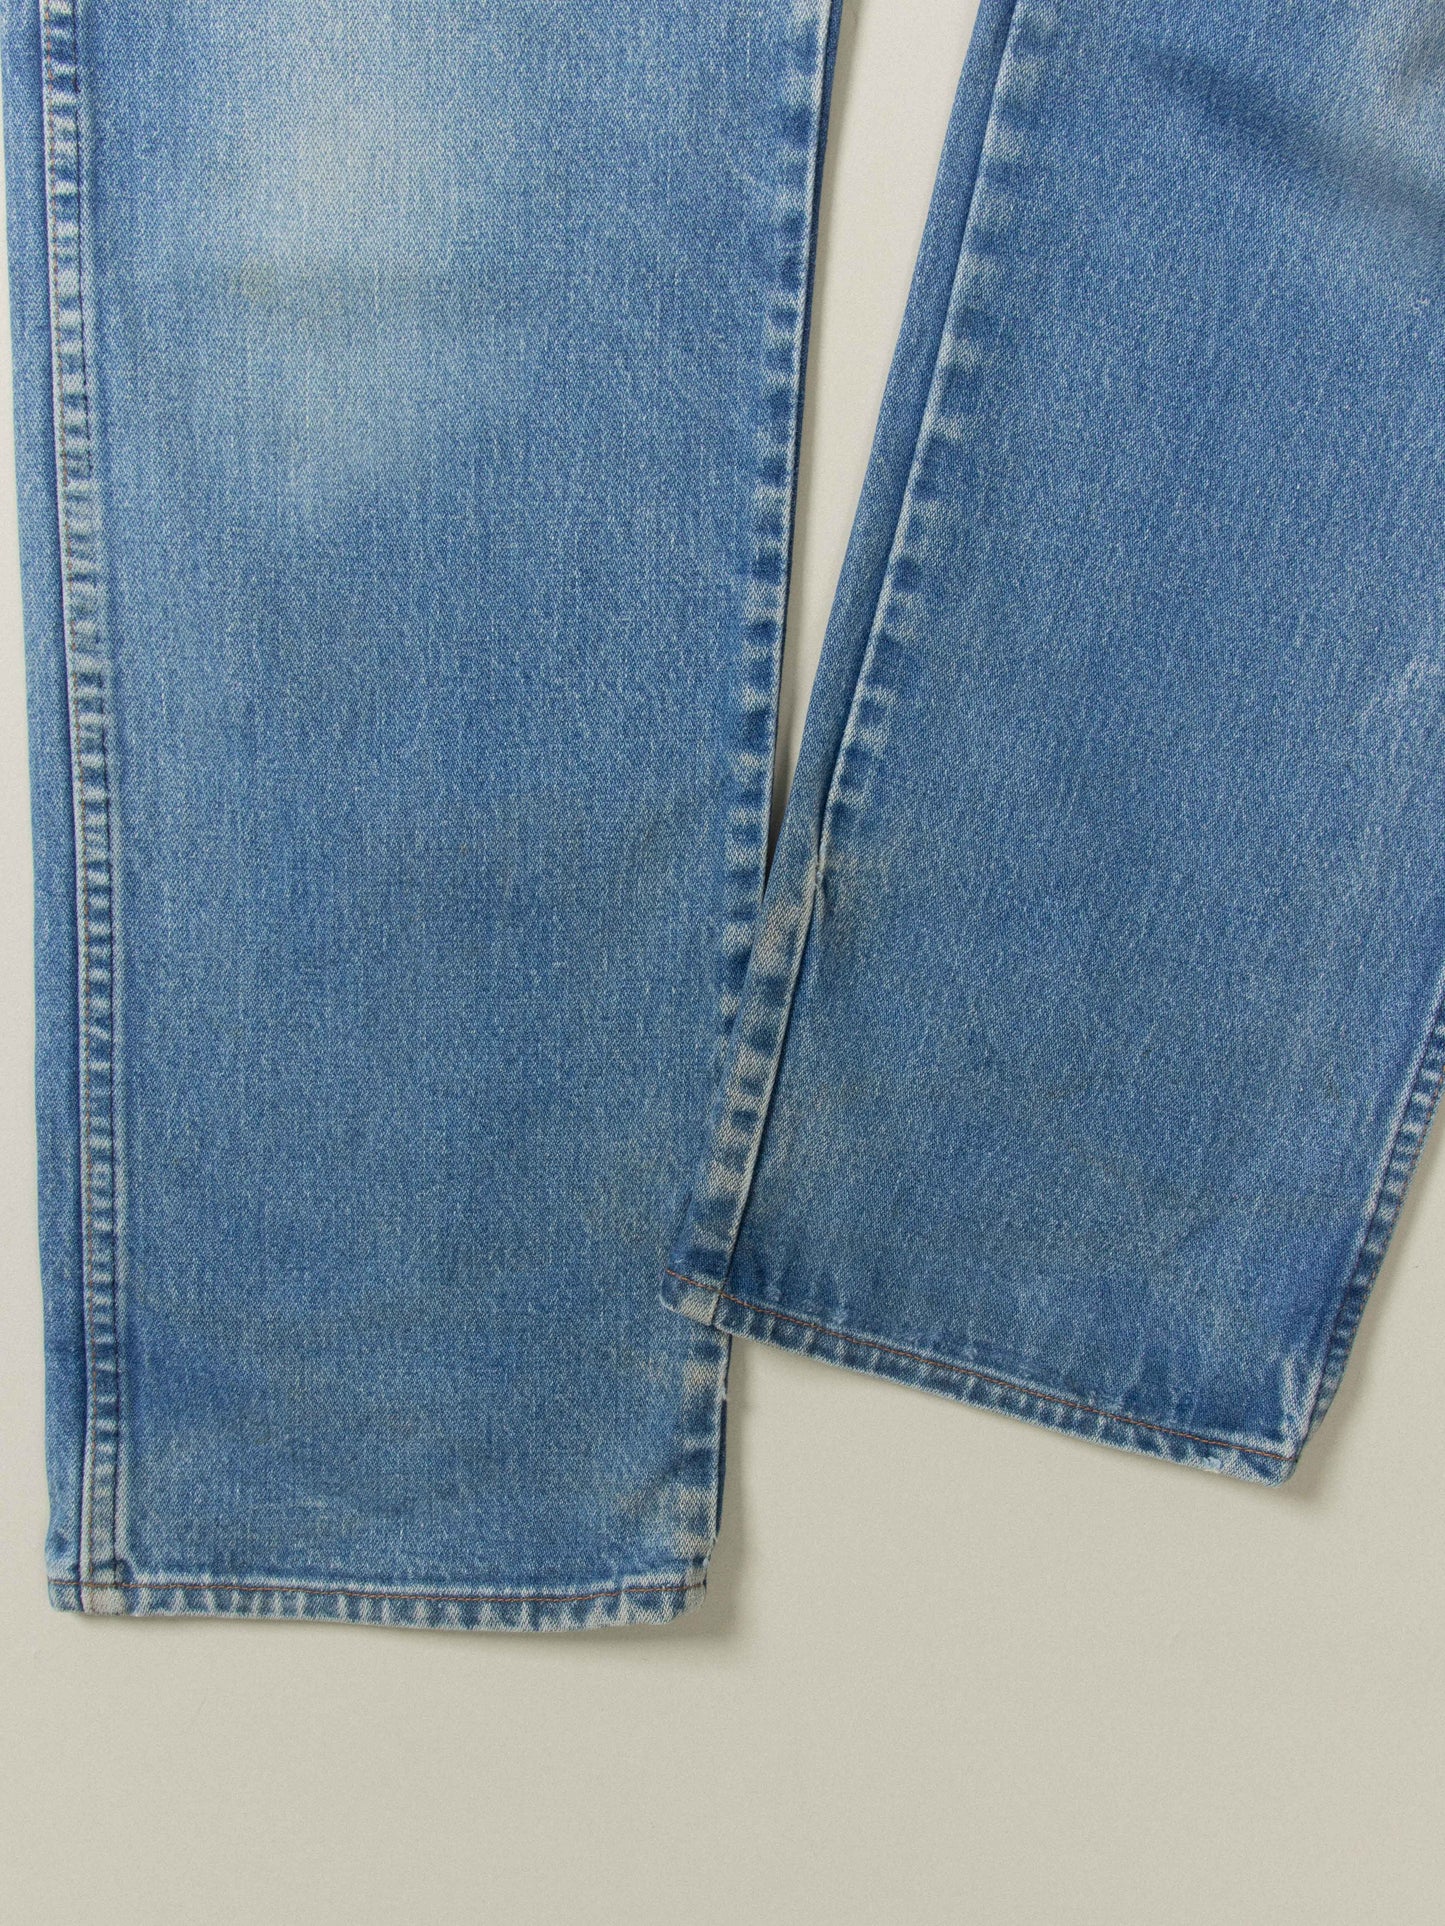 Vtg Wrangler Straight Cut Jeans - Made in USA (33x31)